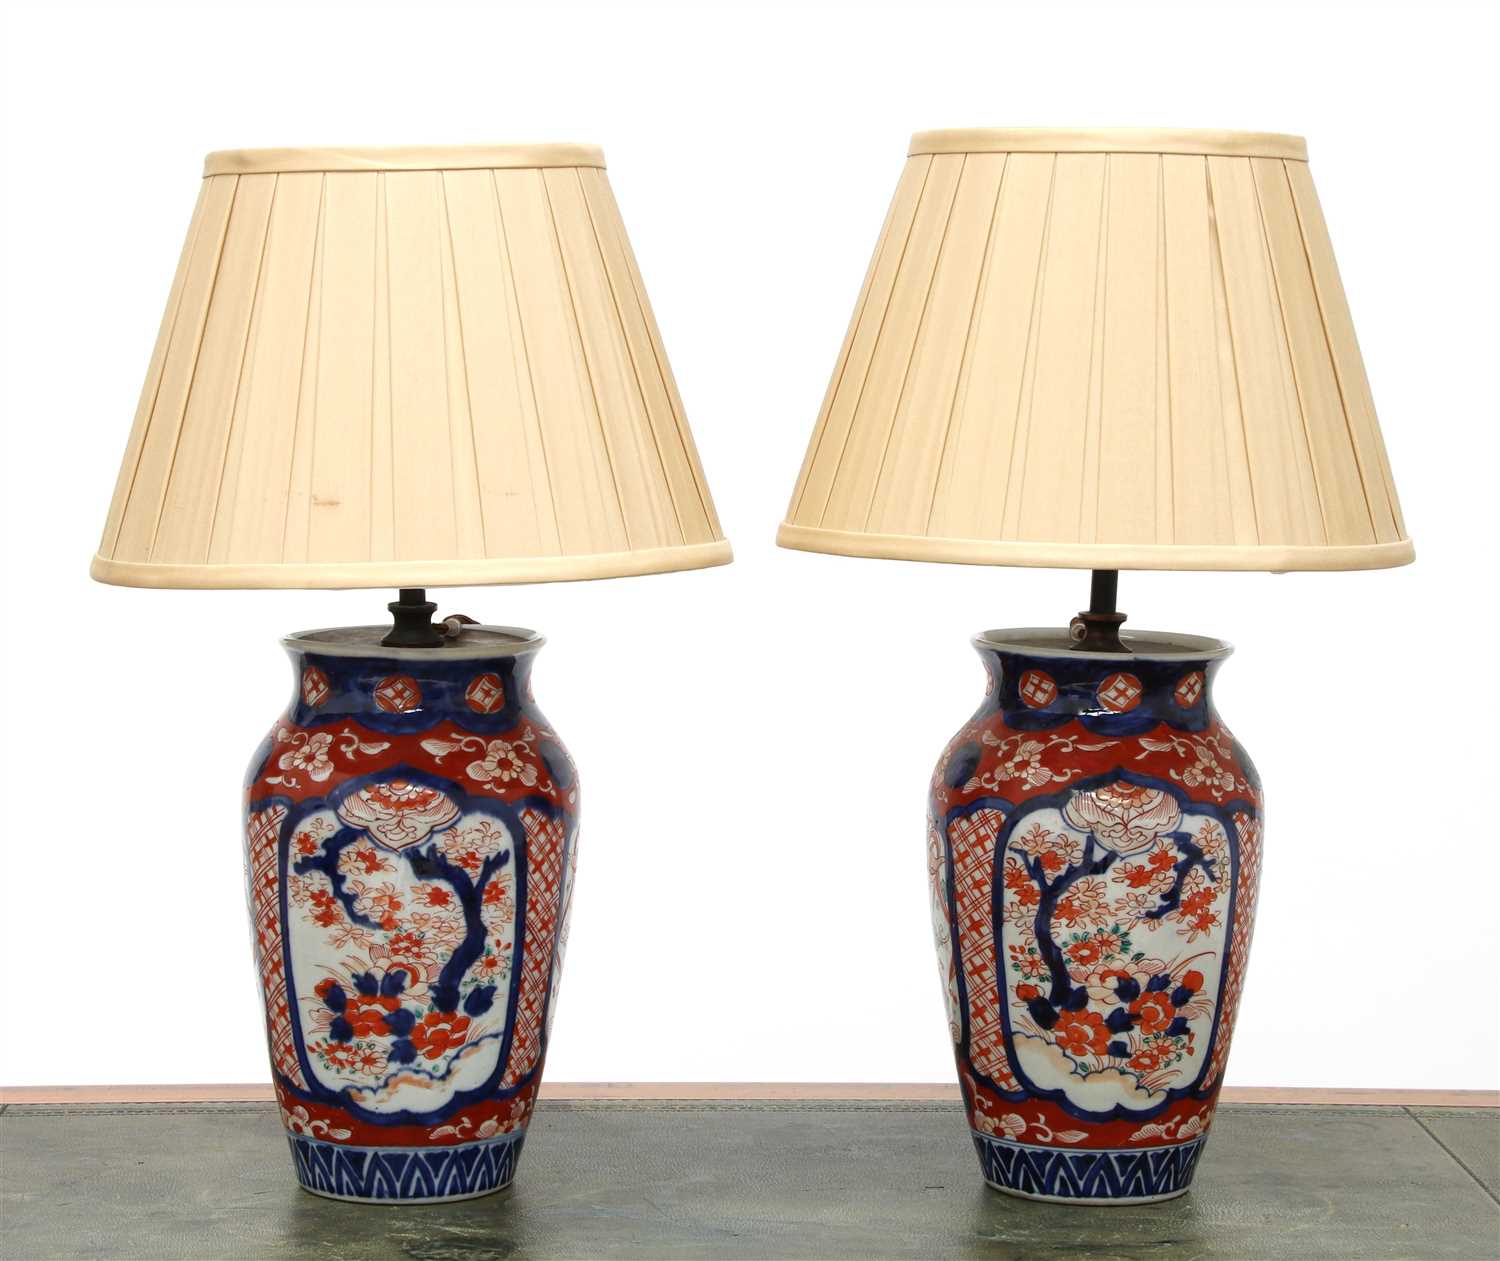 Lot 204 - A pair of Imari vase table lamps